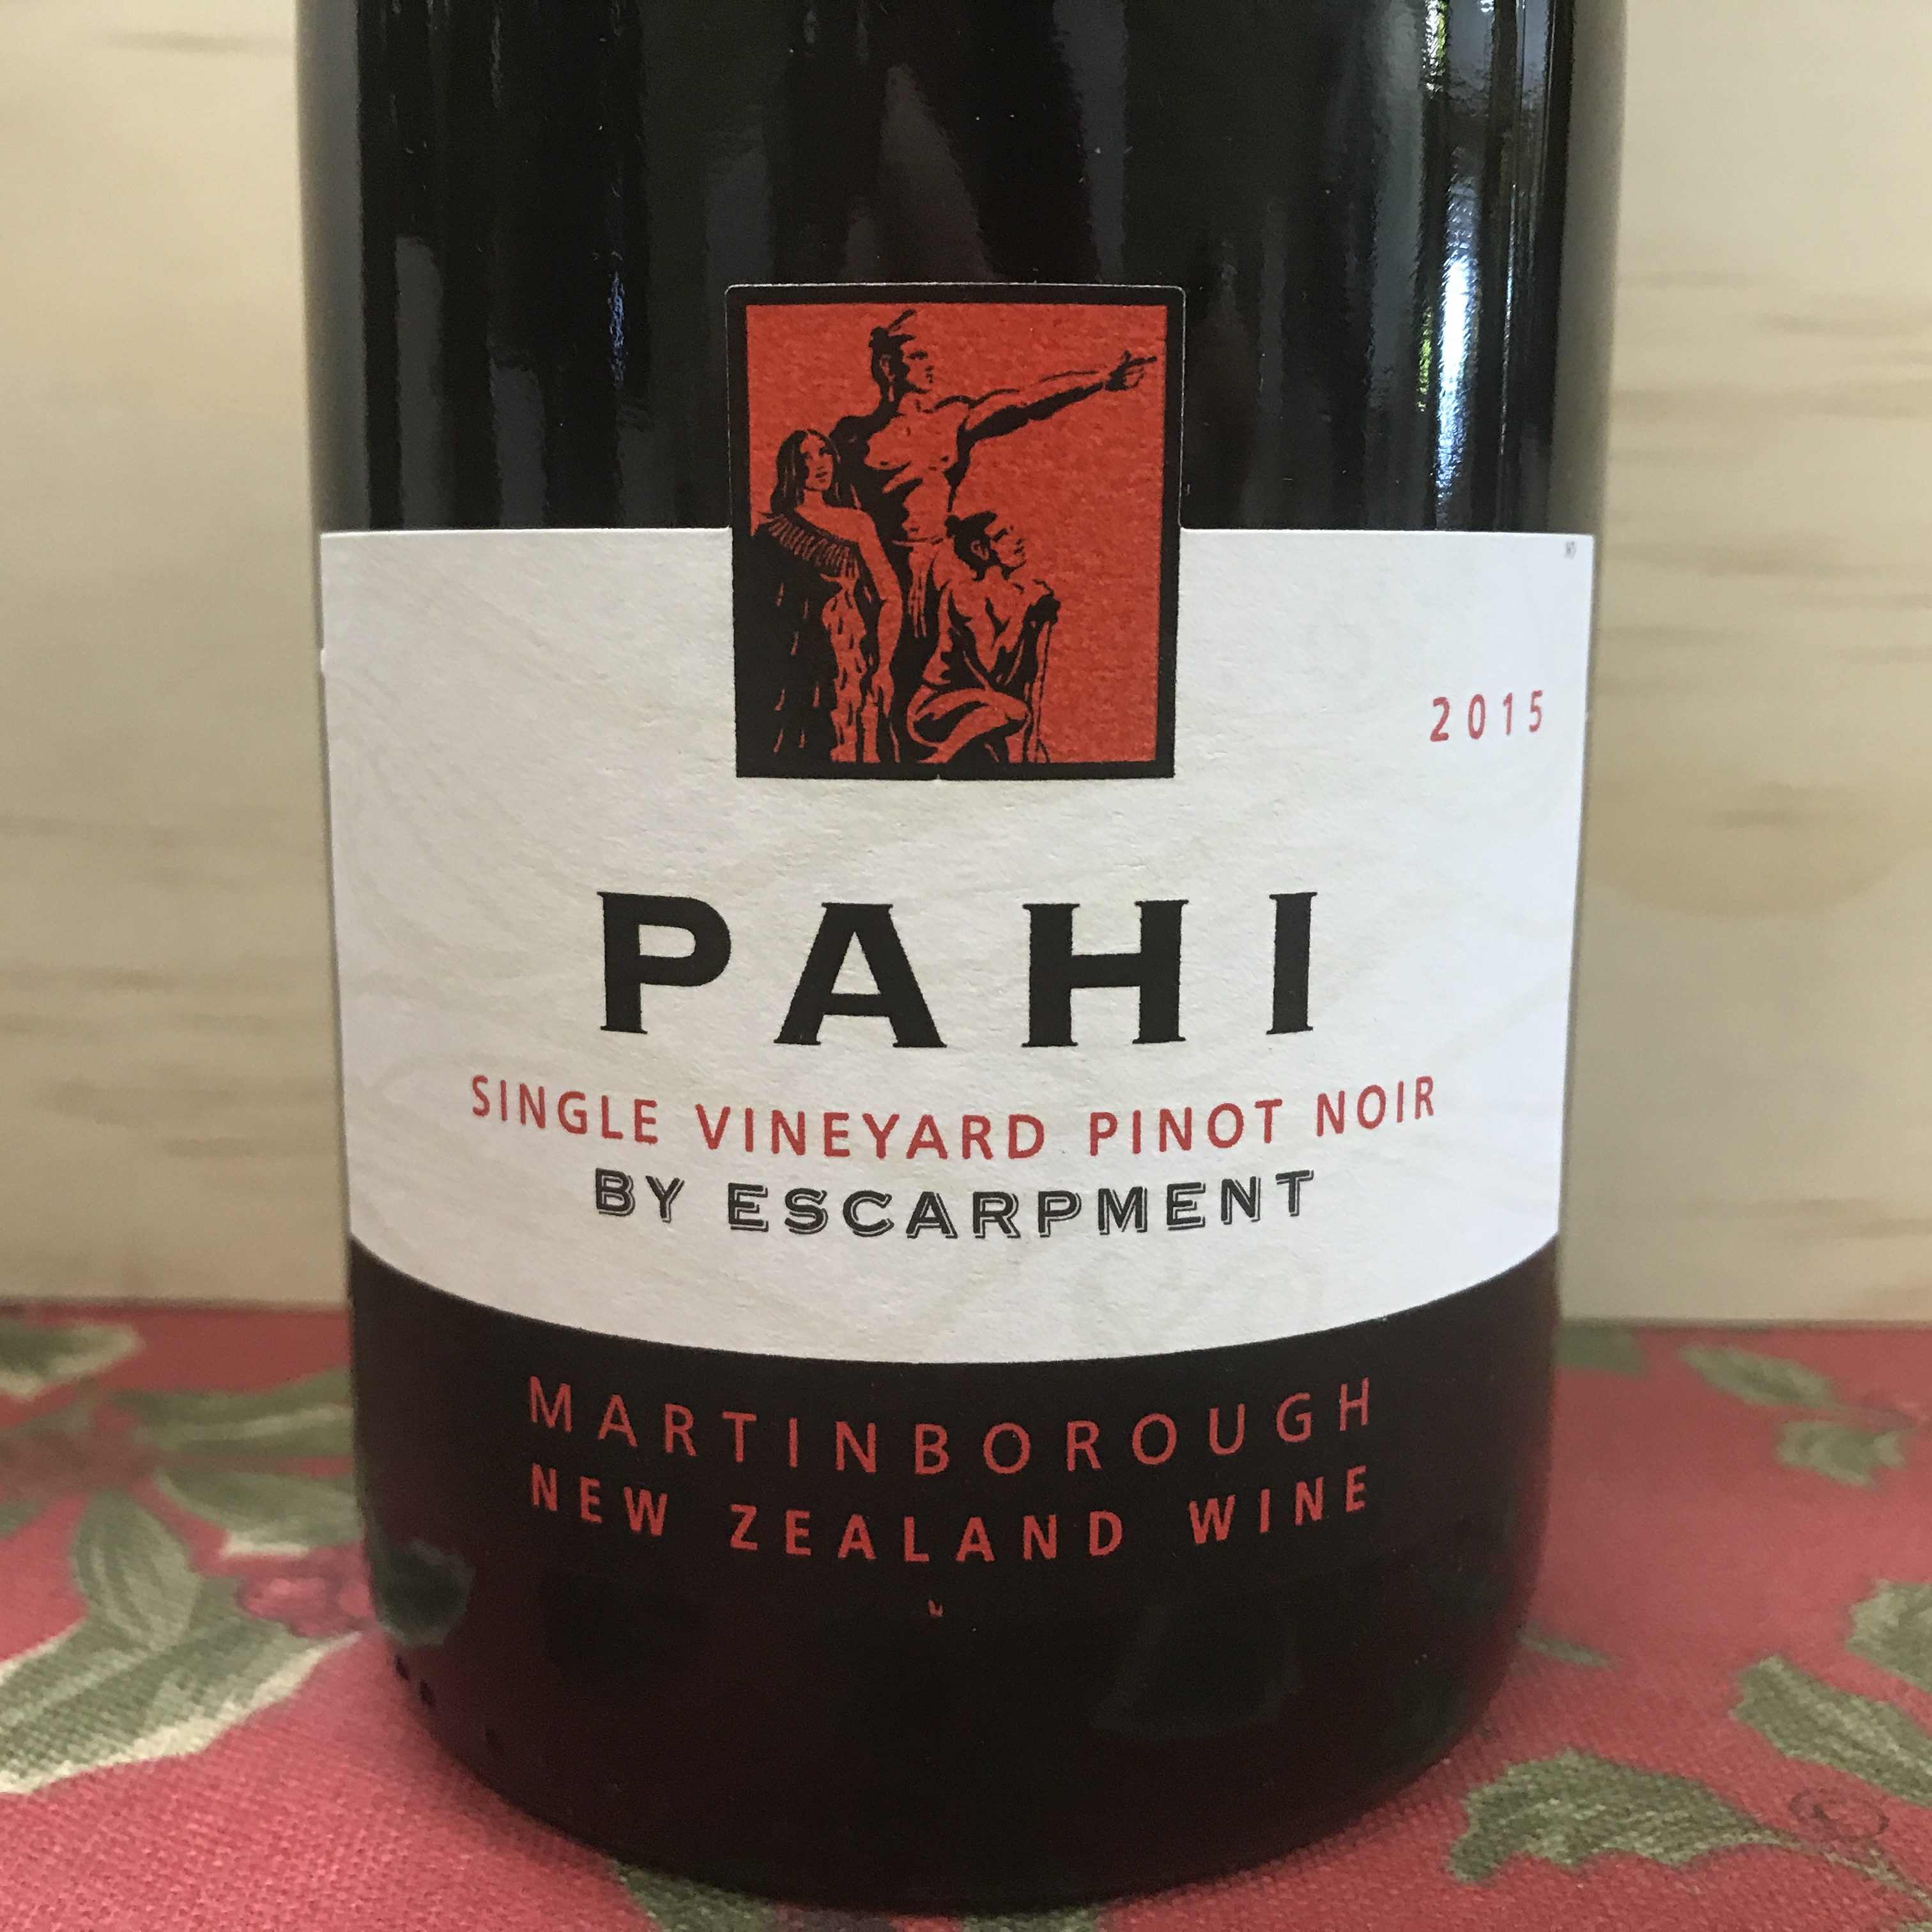 By Escarpment Pahi Martinborough Pinot Noir 2015